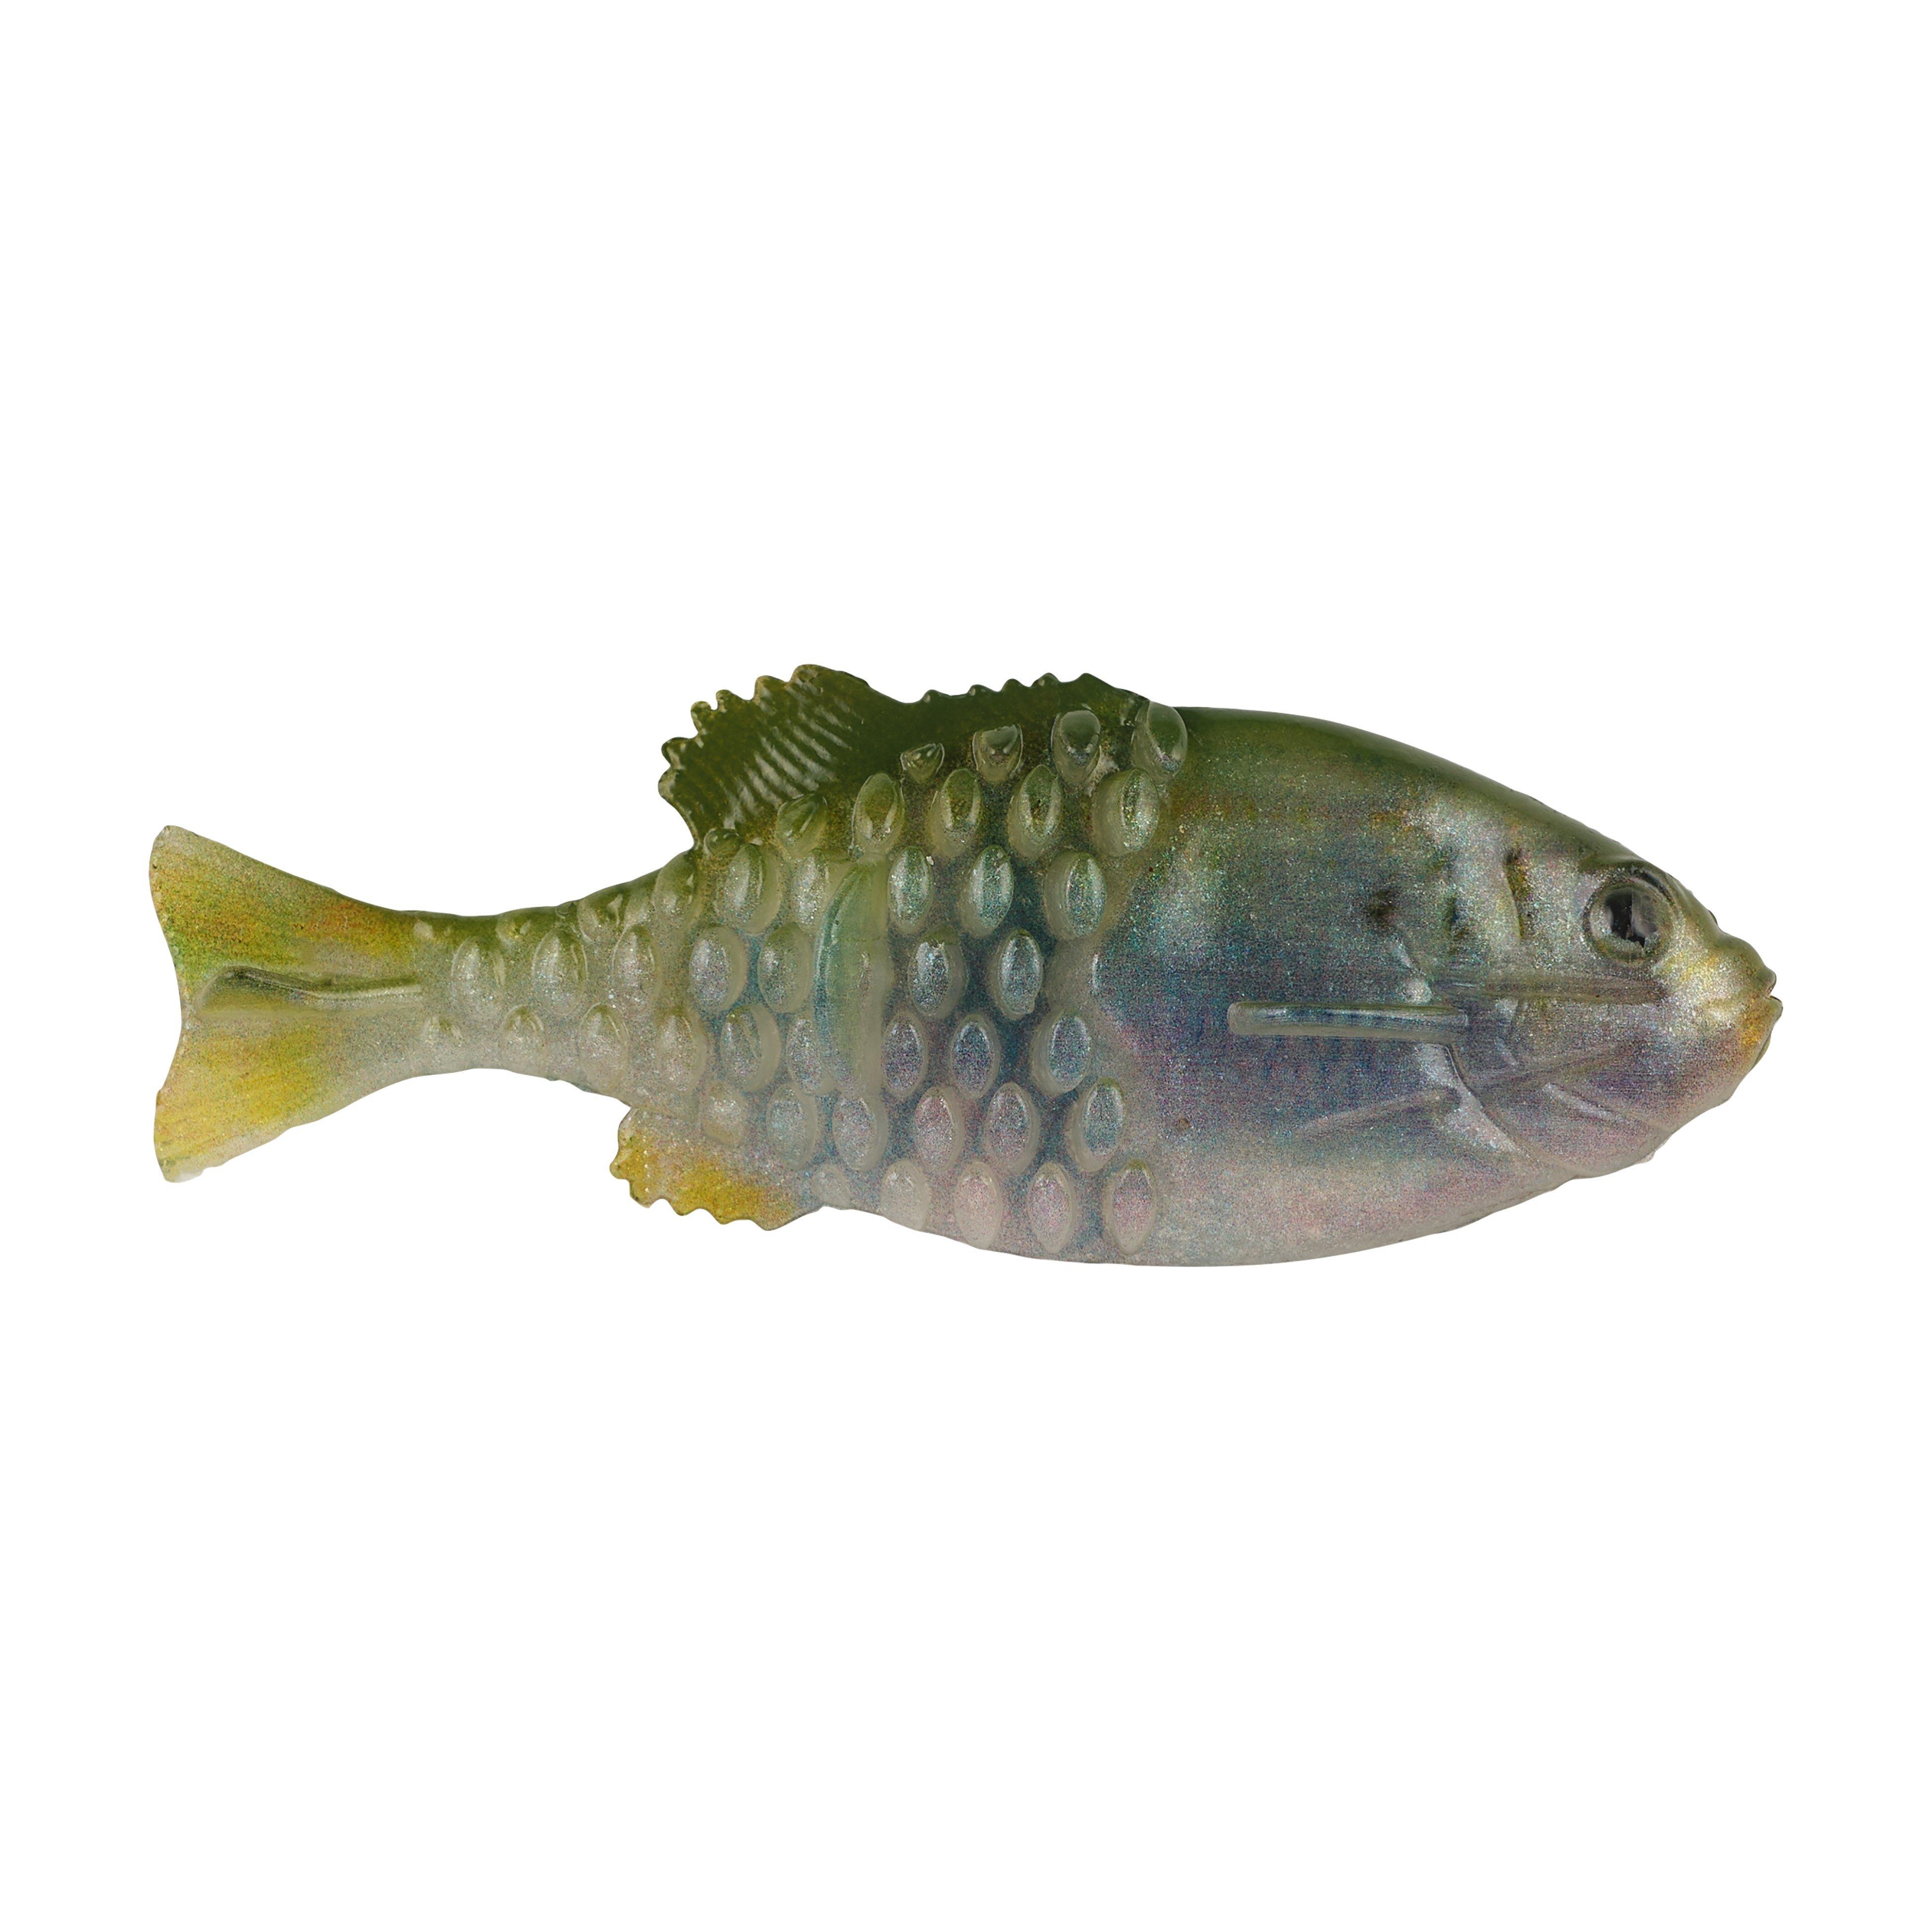 https://media.purefishing.com/s/purefishing/1573513_1573095_MS?$collection_tile$